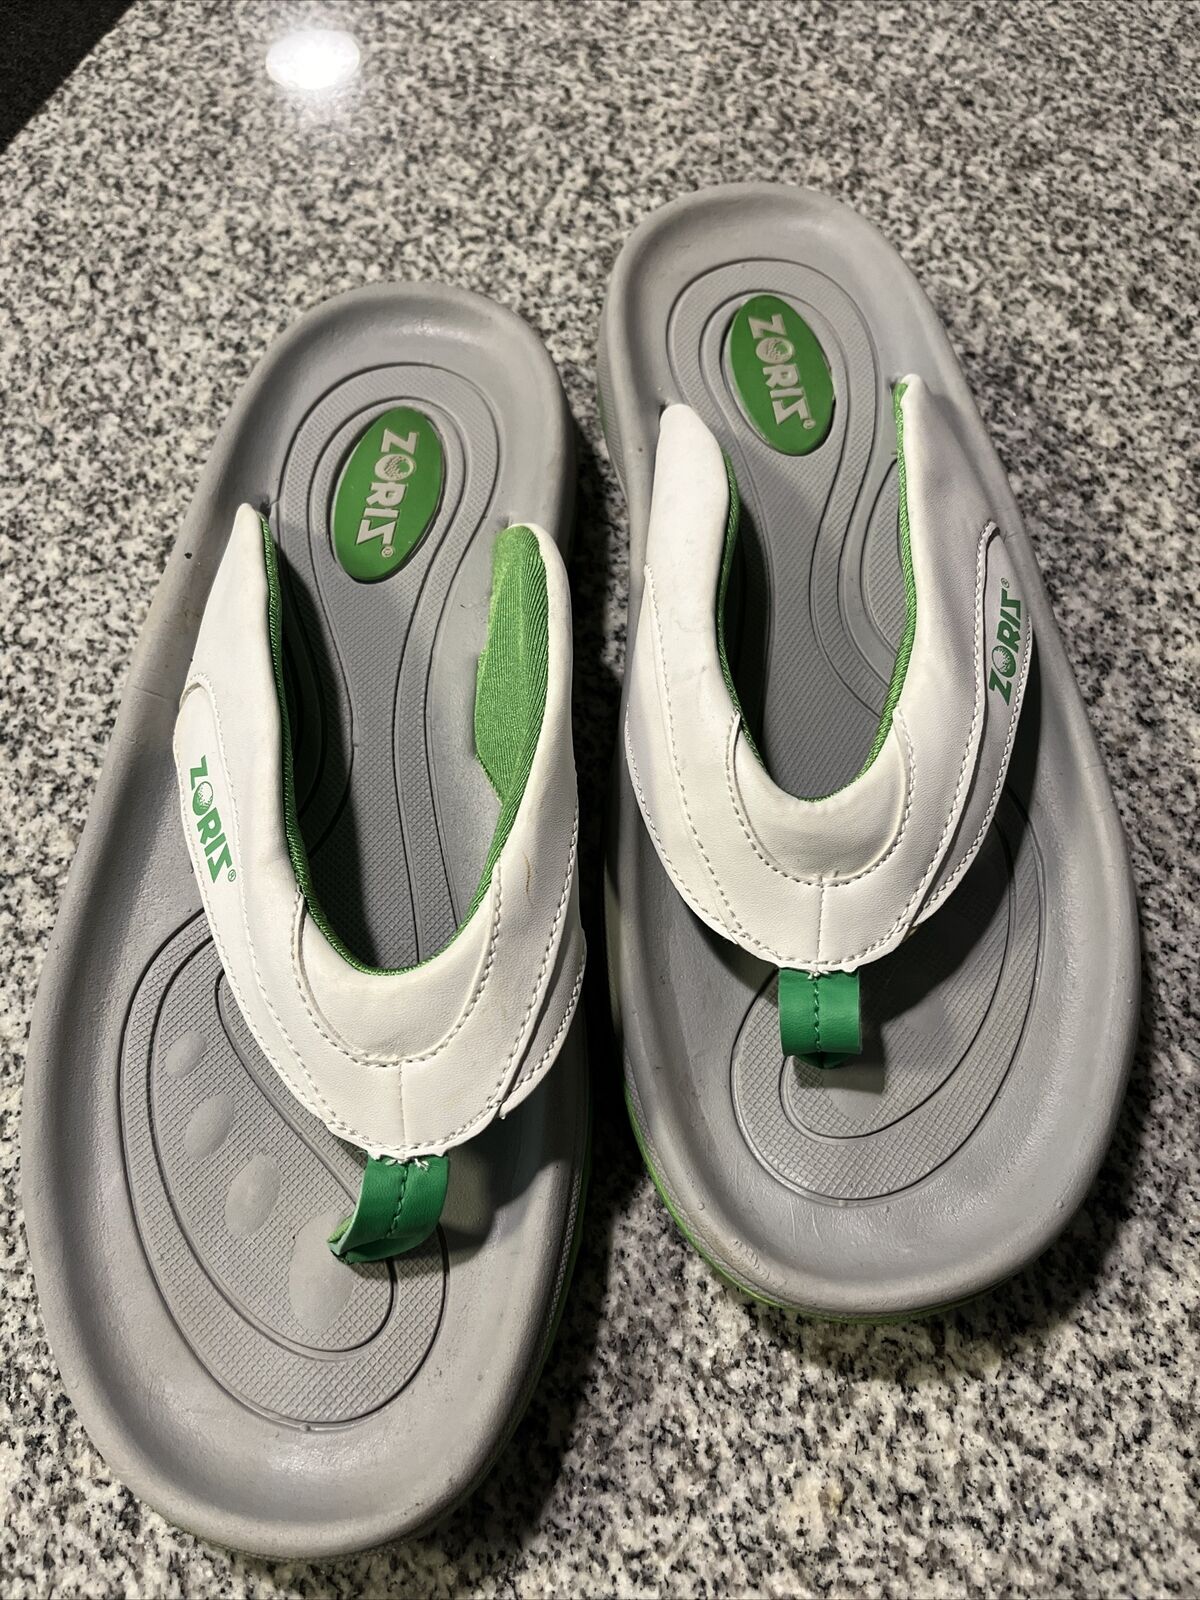 Zoriz Golf Flip Flop Sandals Mens Size 10 Gray Green Cleated